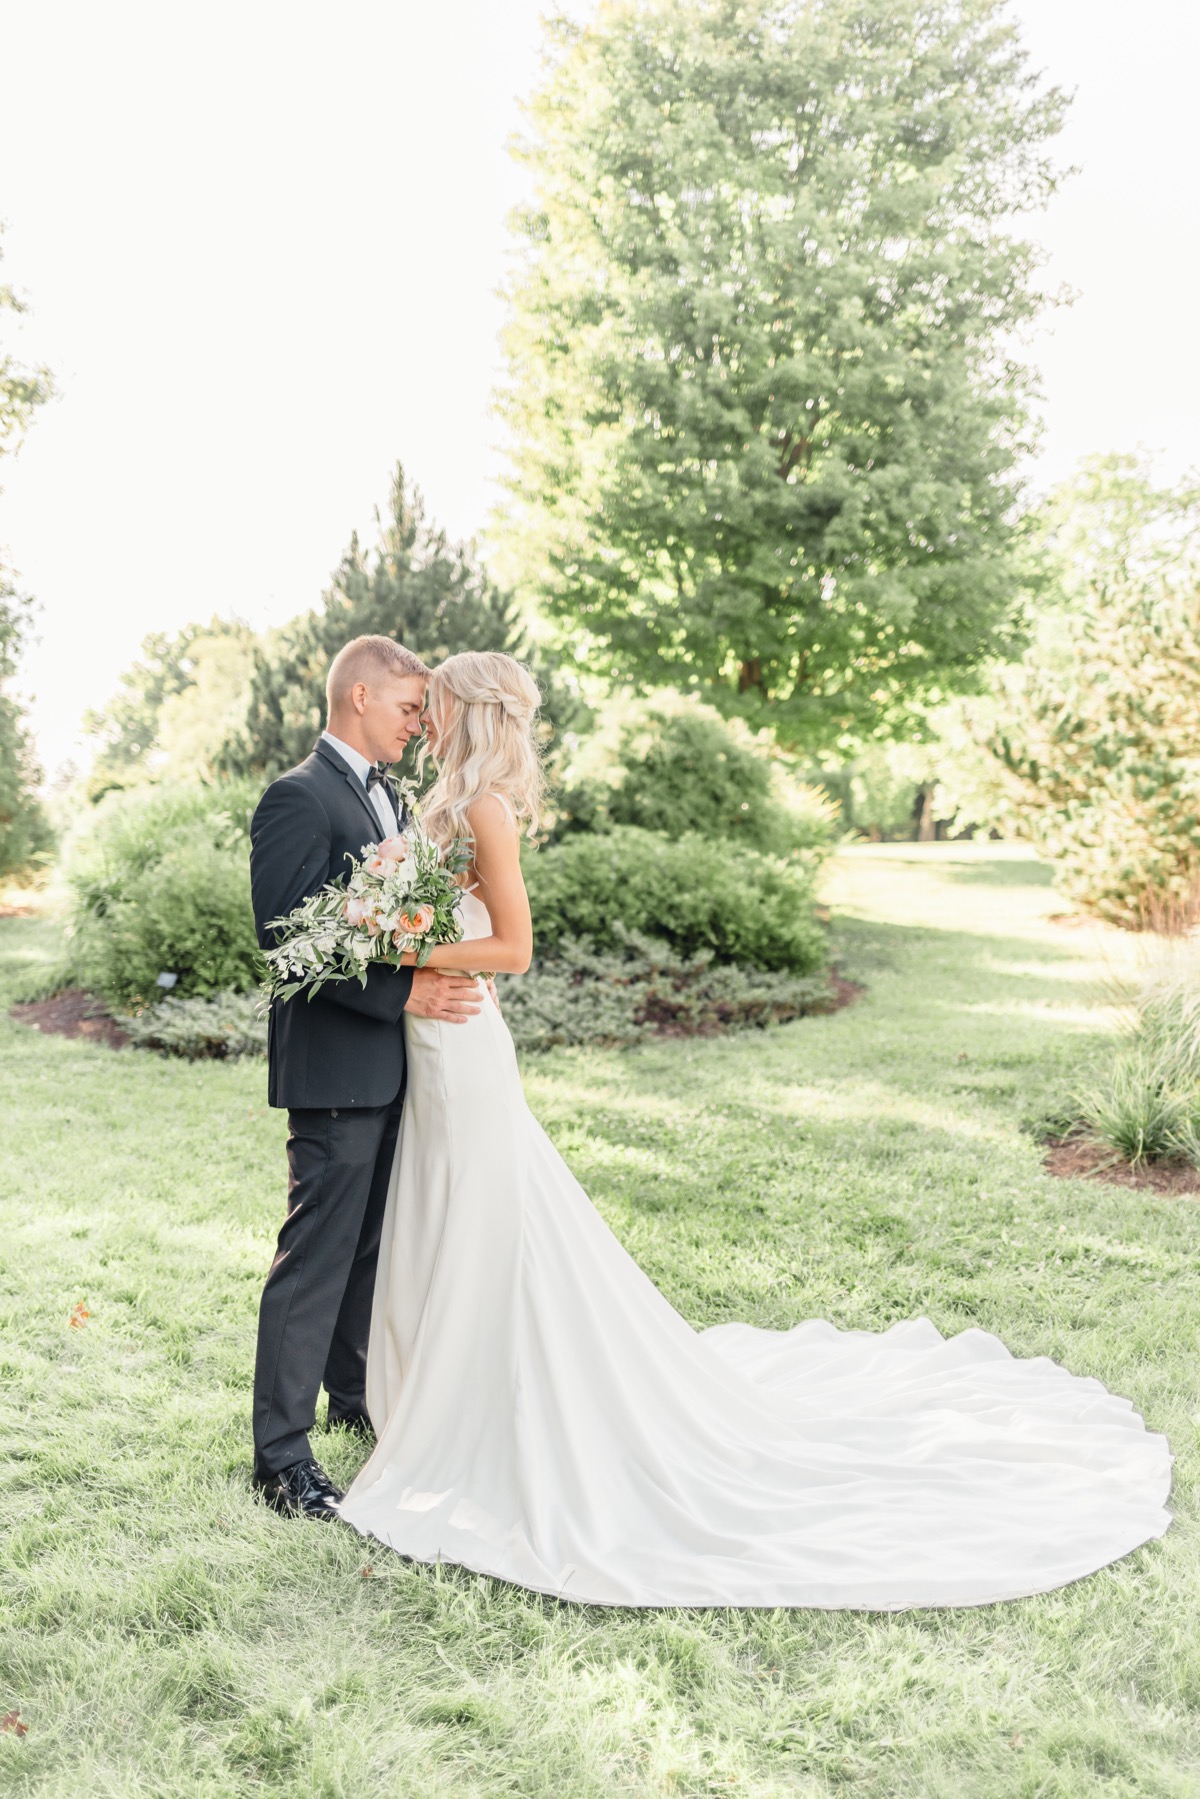 Franklin Park Conservatory and The Clock Tower Catholic Wedding | Catherine Milliron Photography | Ohio and Destination Fine Art Wedding Photographer